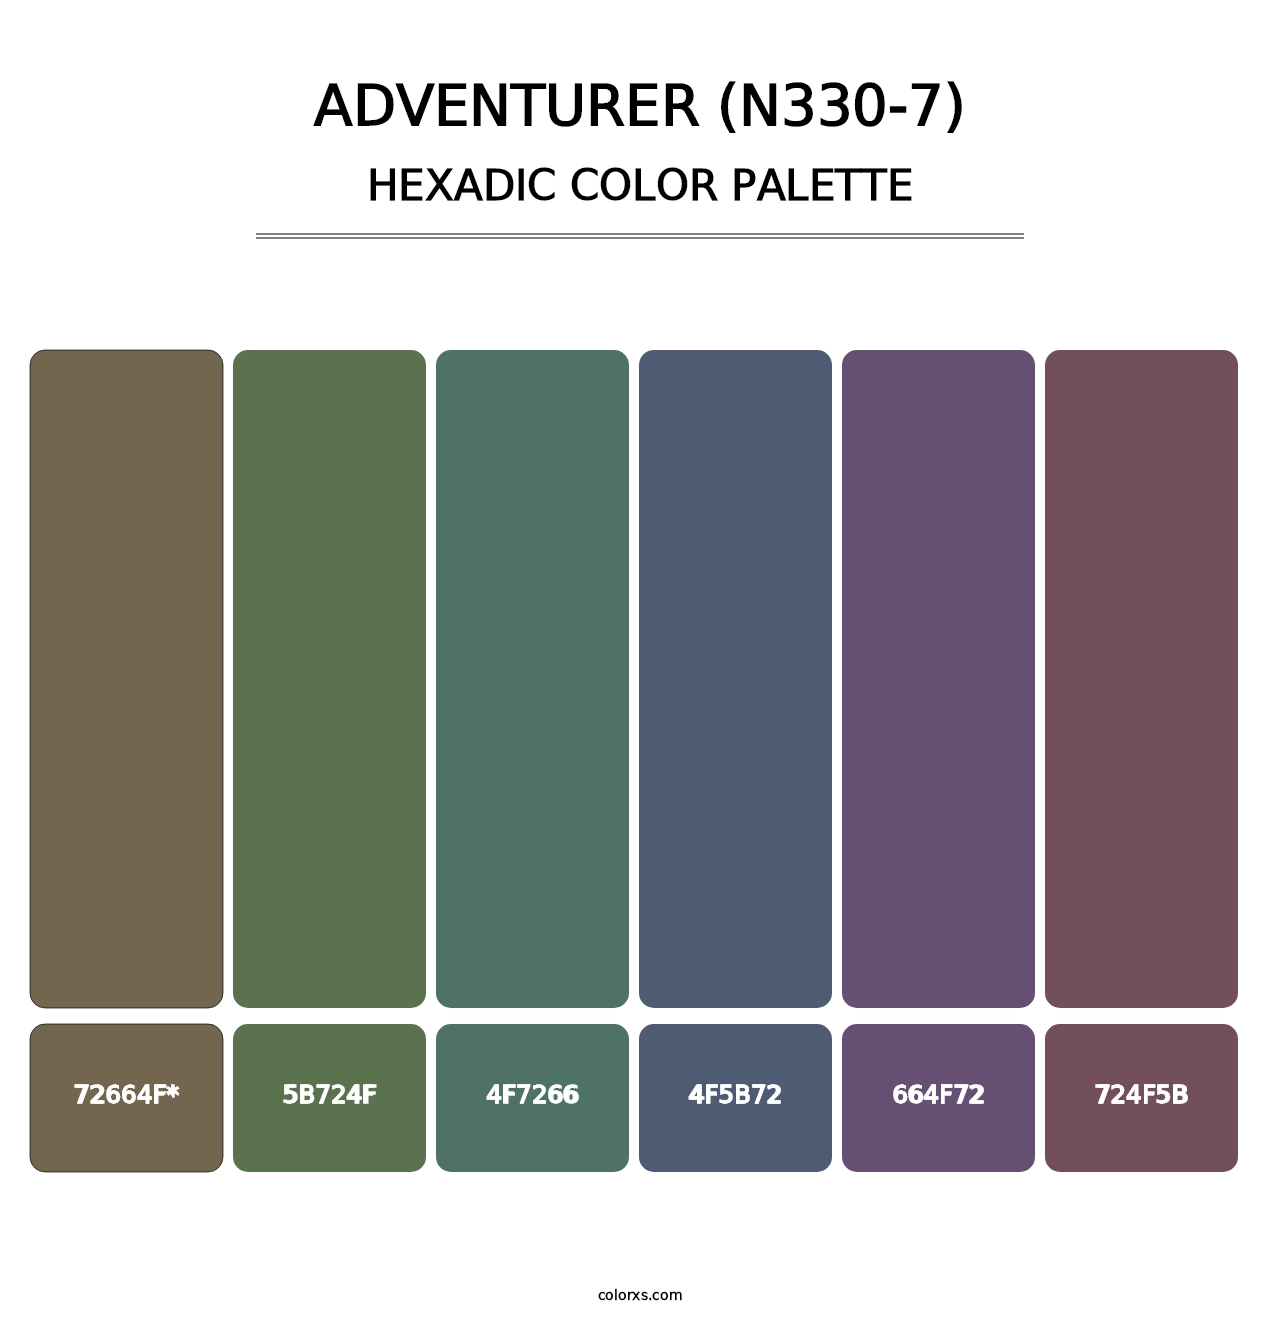 Adventurer (N330-7) - Hexadic Color Palette